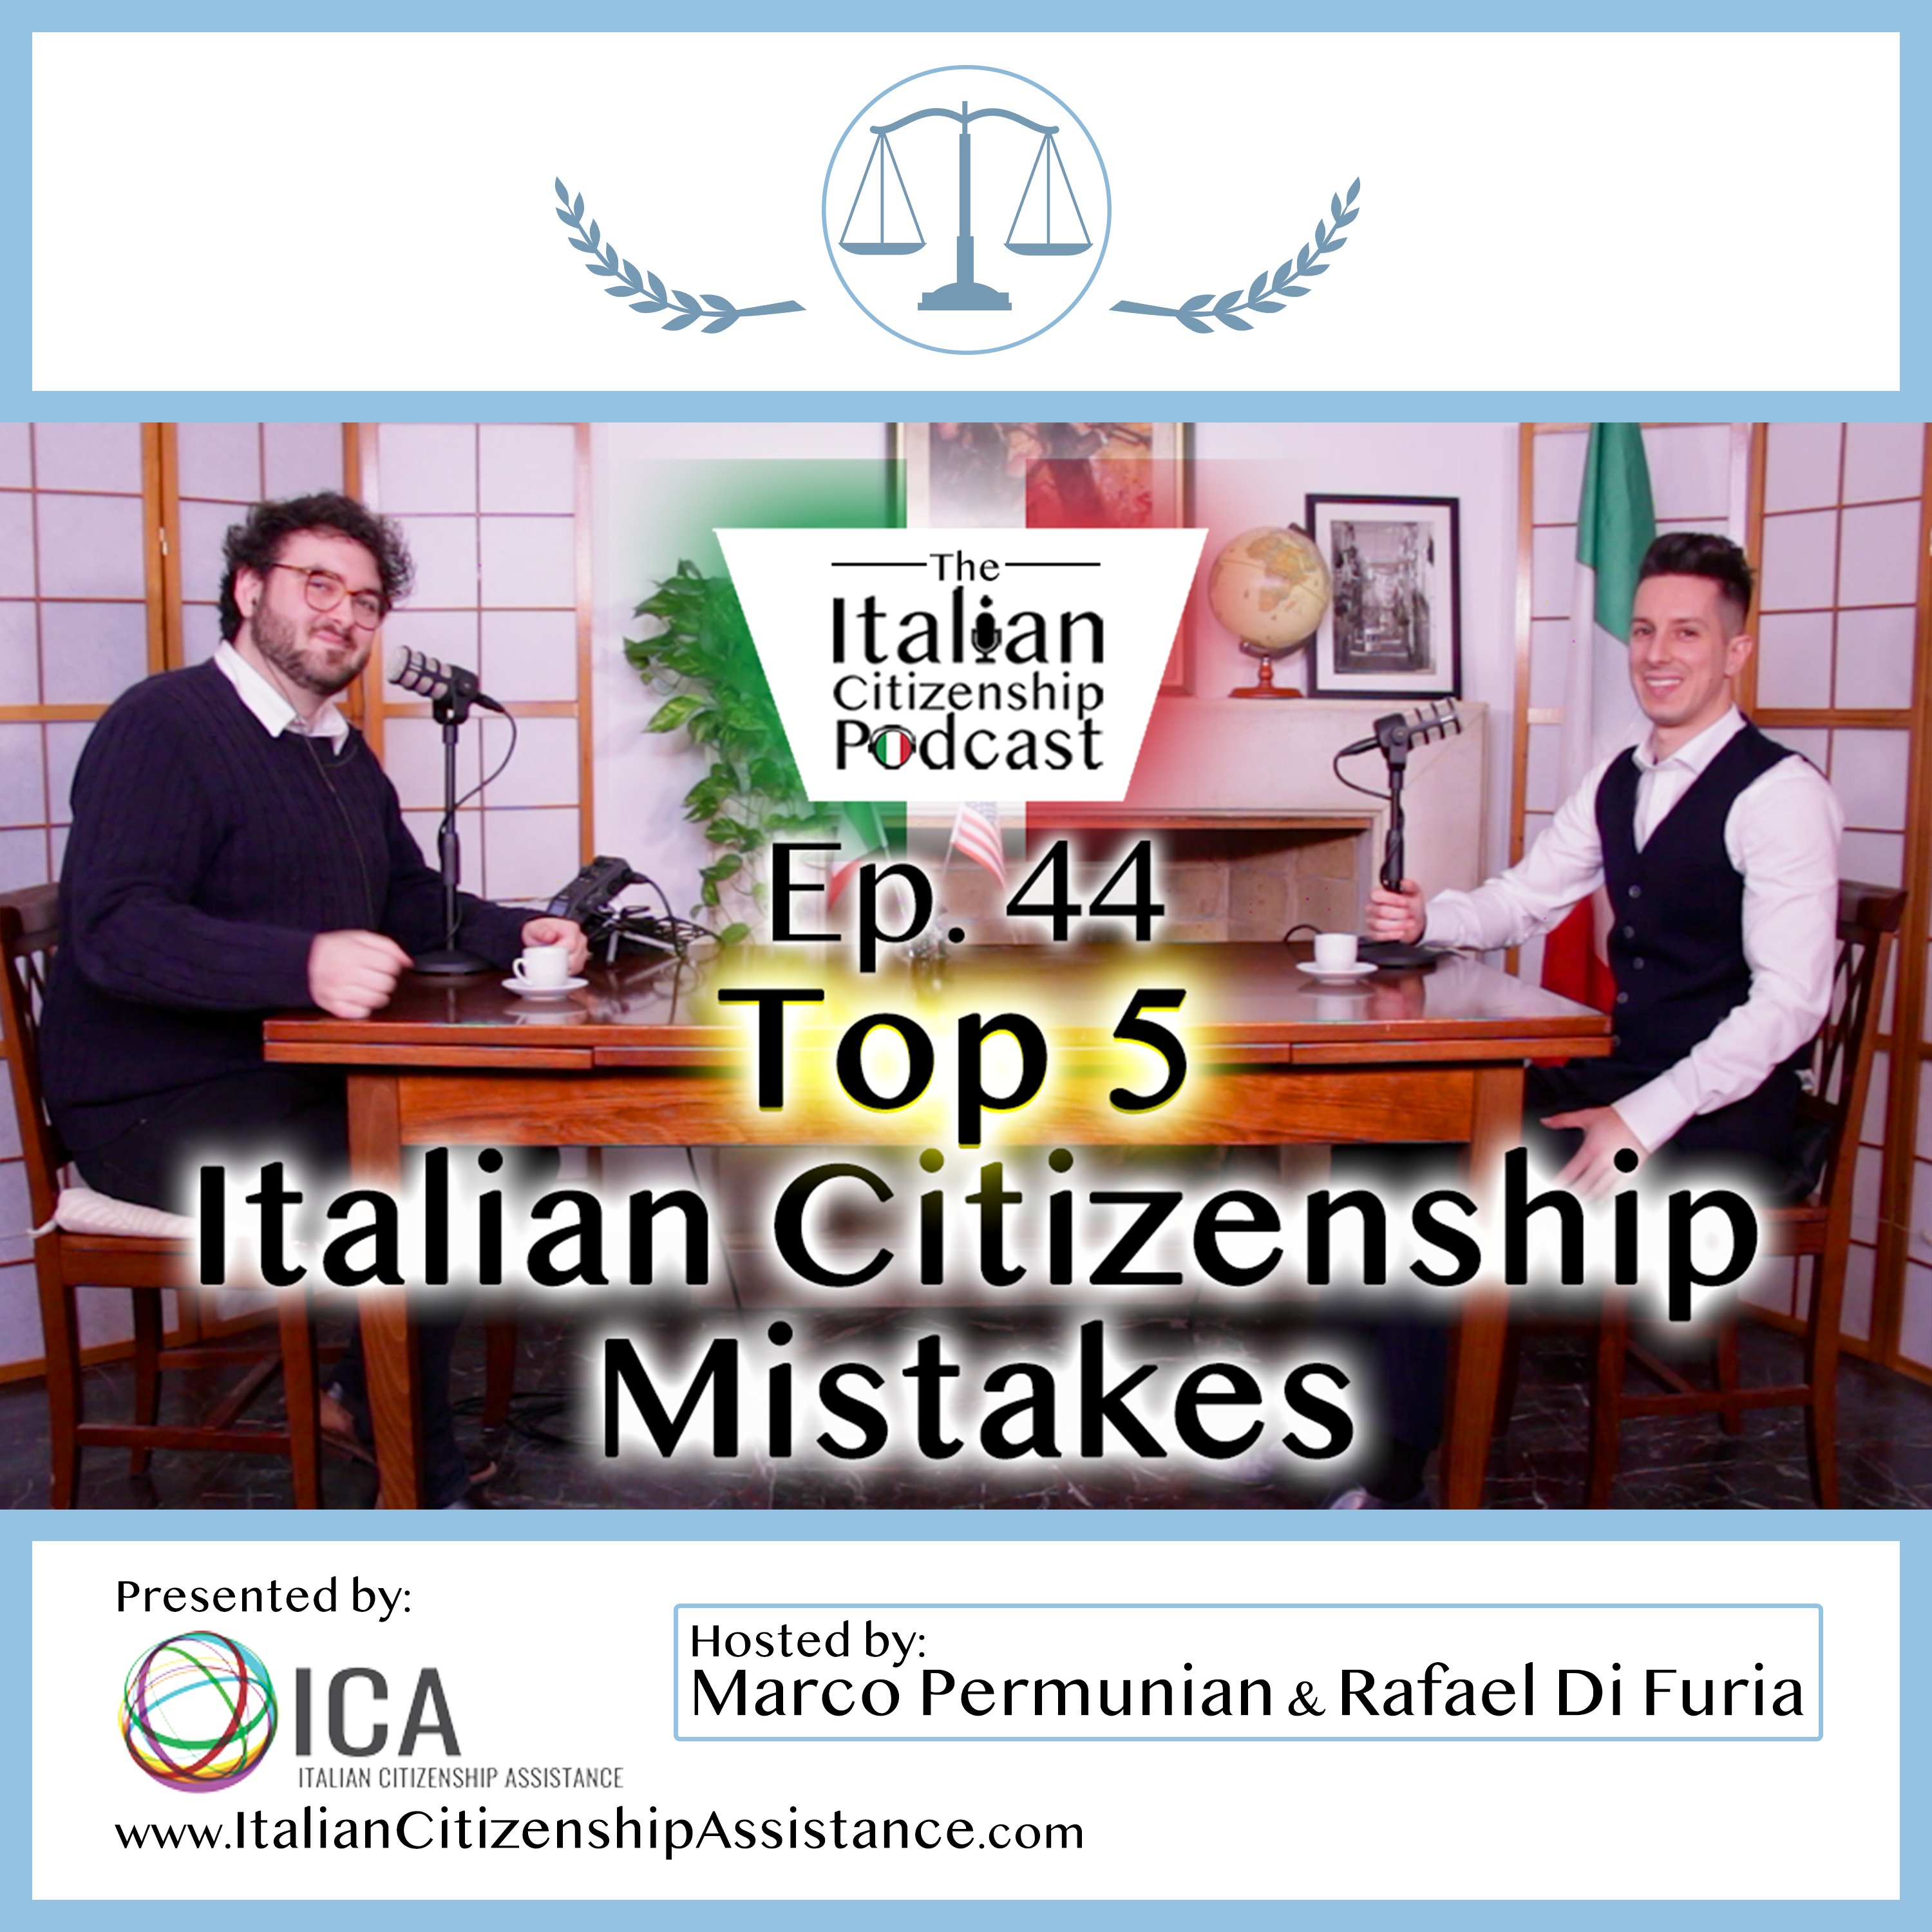 Top 5 Italian Citizenship Mistakes